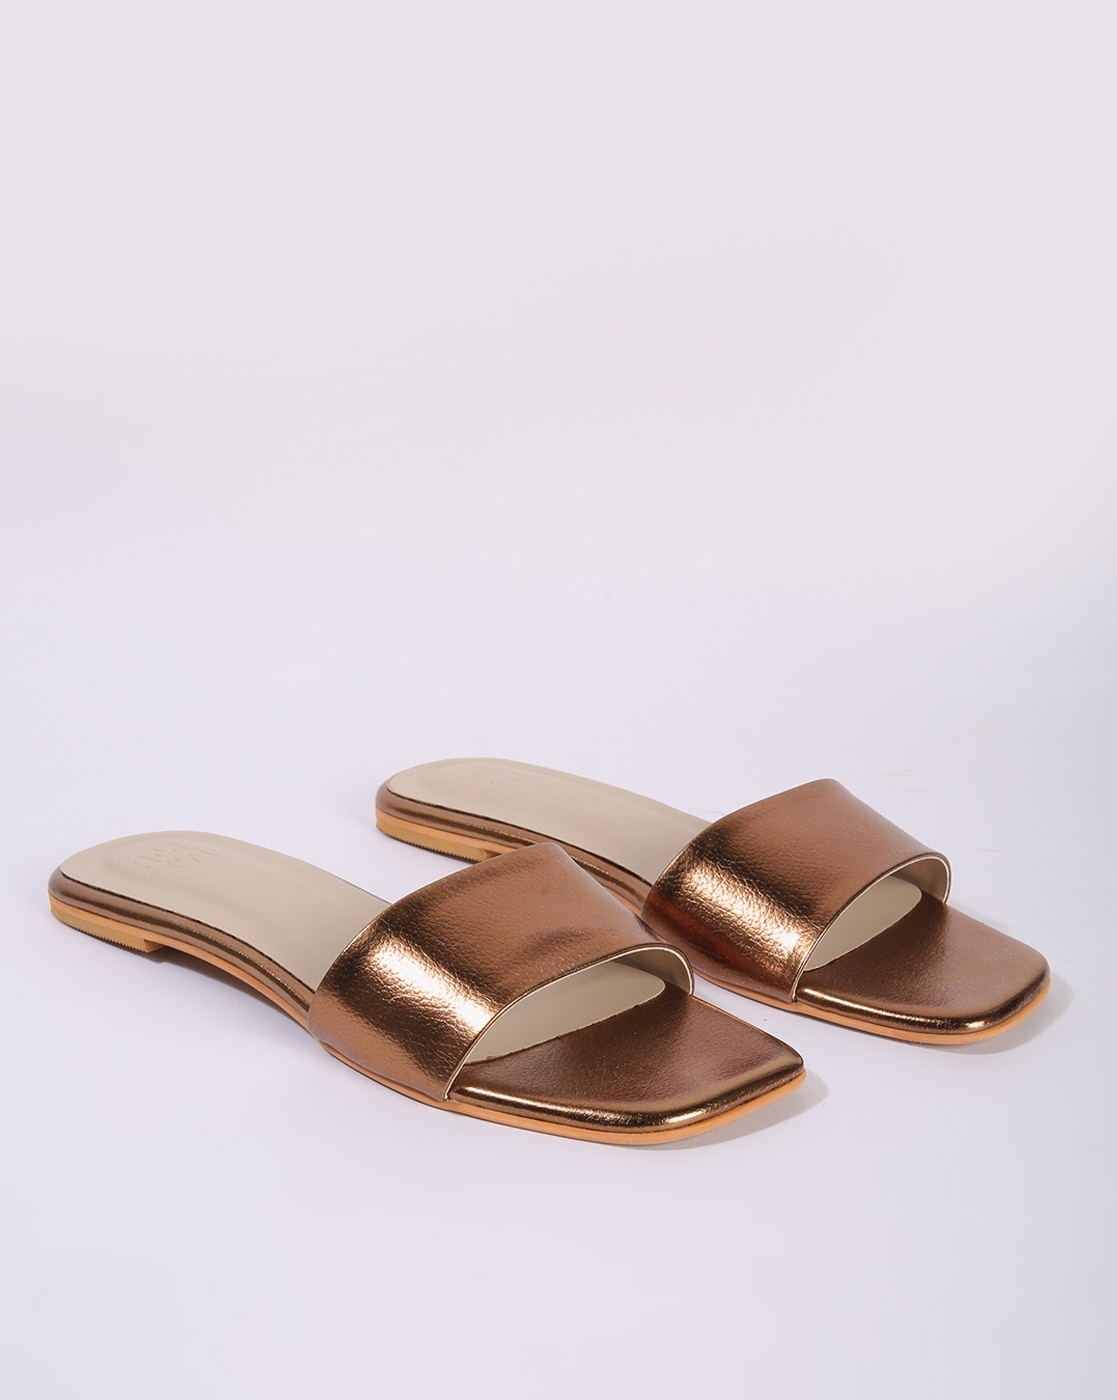 Top more than 65 metallic flat sandals latest